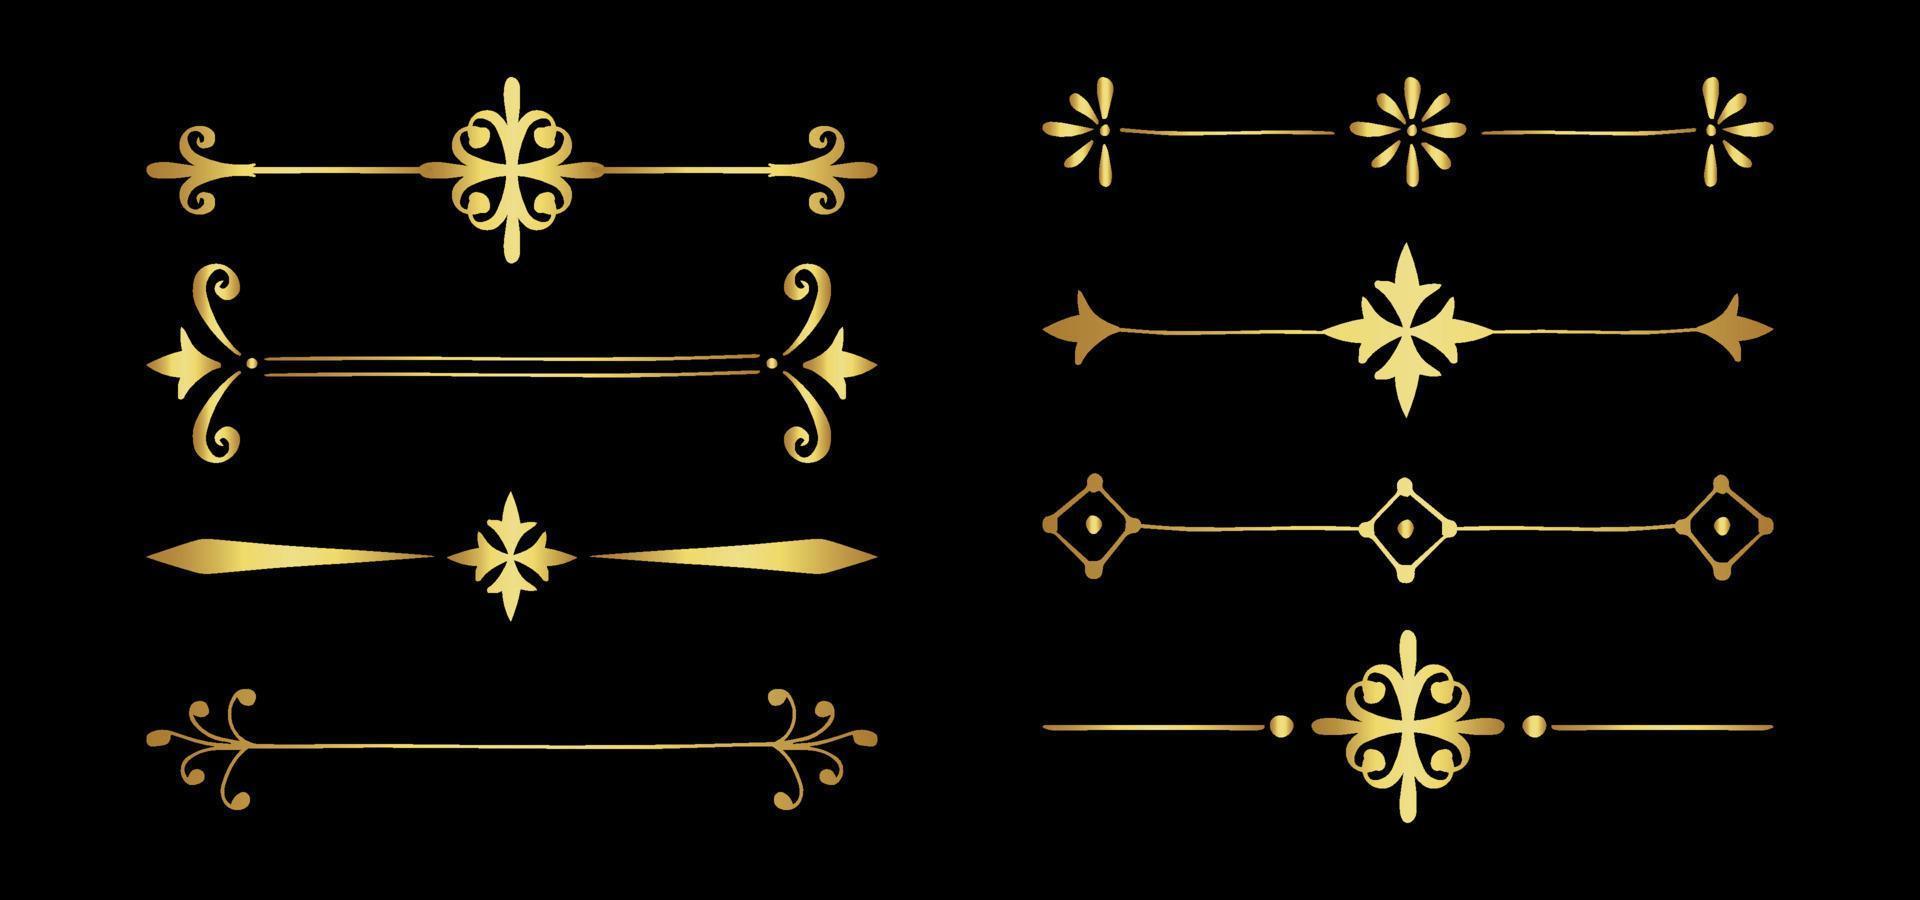 golden filigree dividers. Ornate swirl borders. Vector isolated gold fancy separators. Classic wedding invitation calligraphic lines